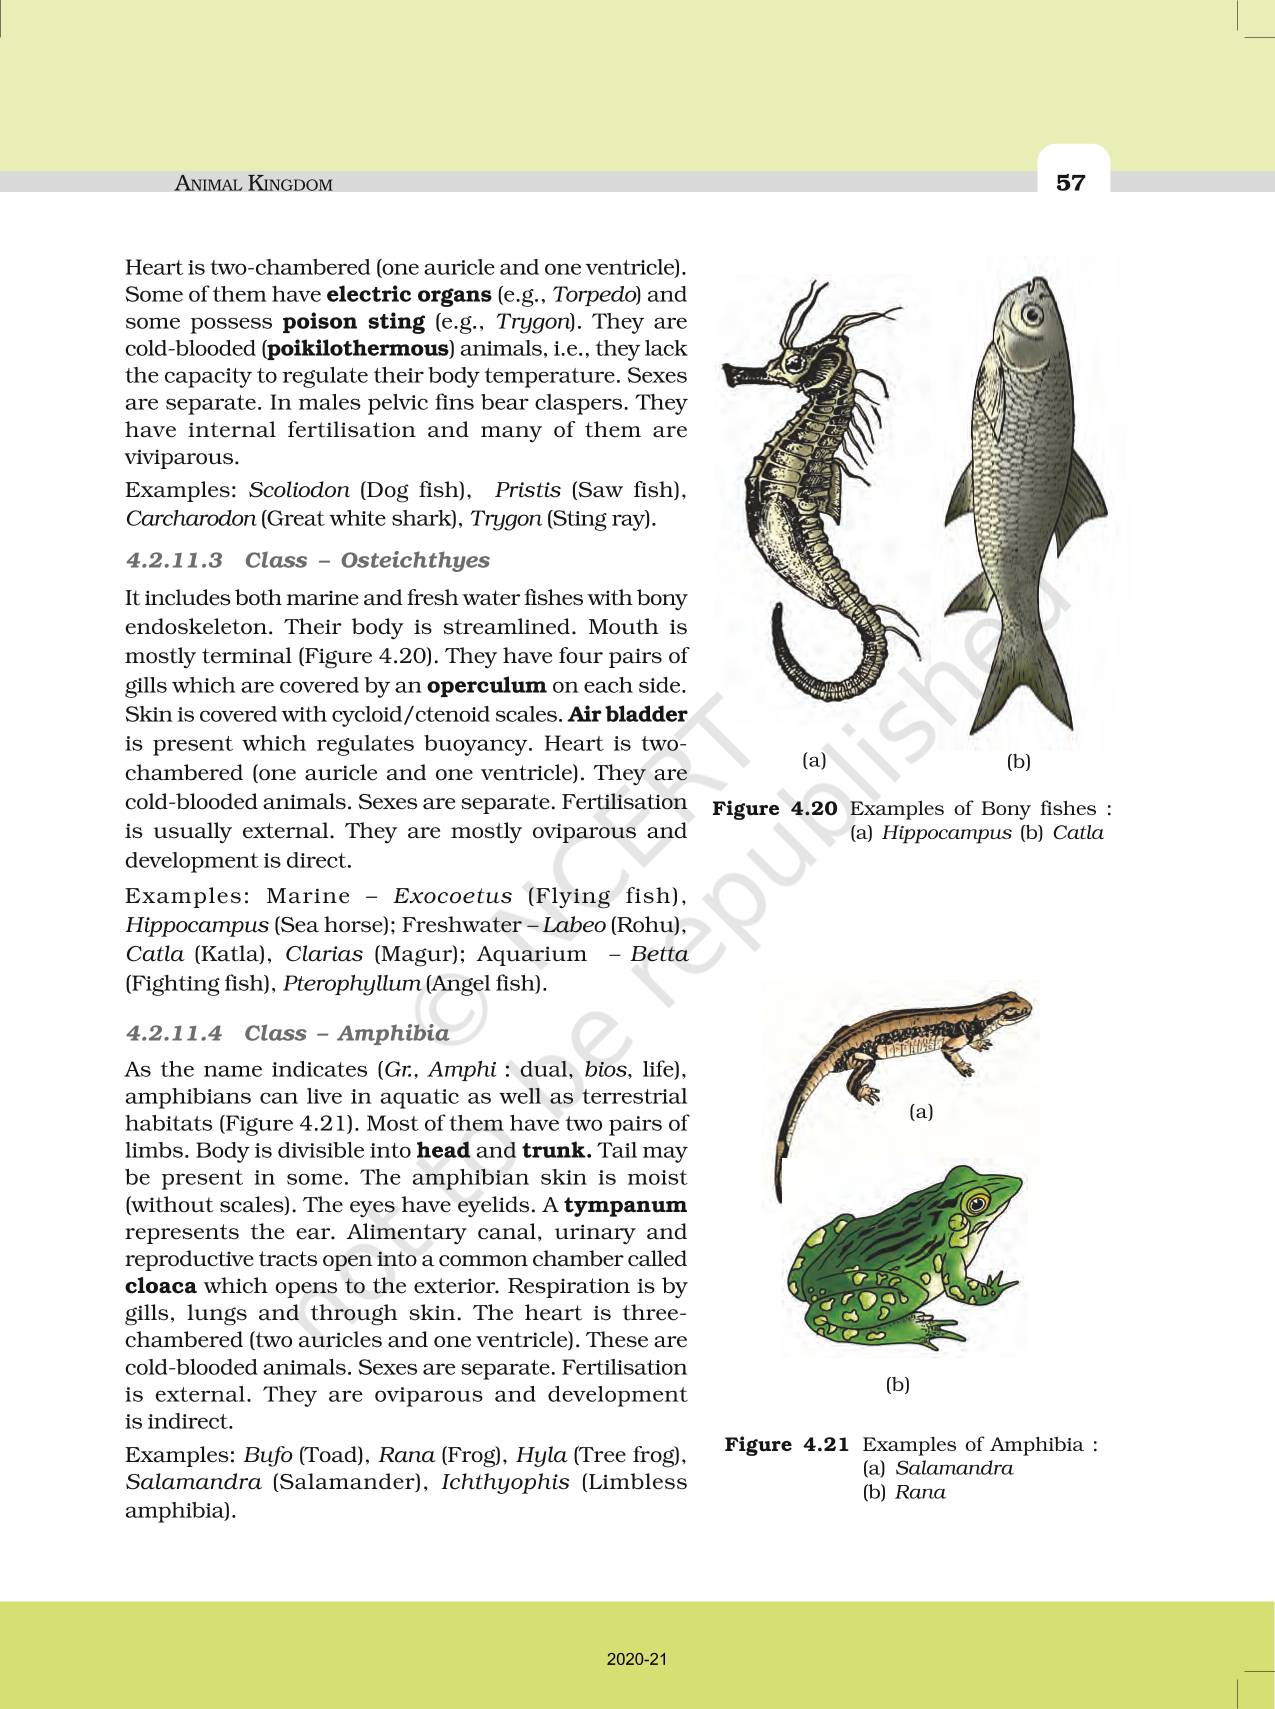 Animal Kingdom - NCERT Book of Class 11 Biology